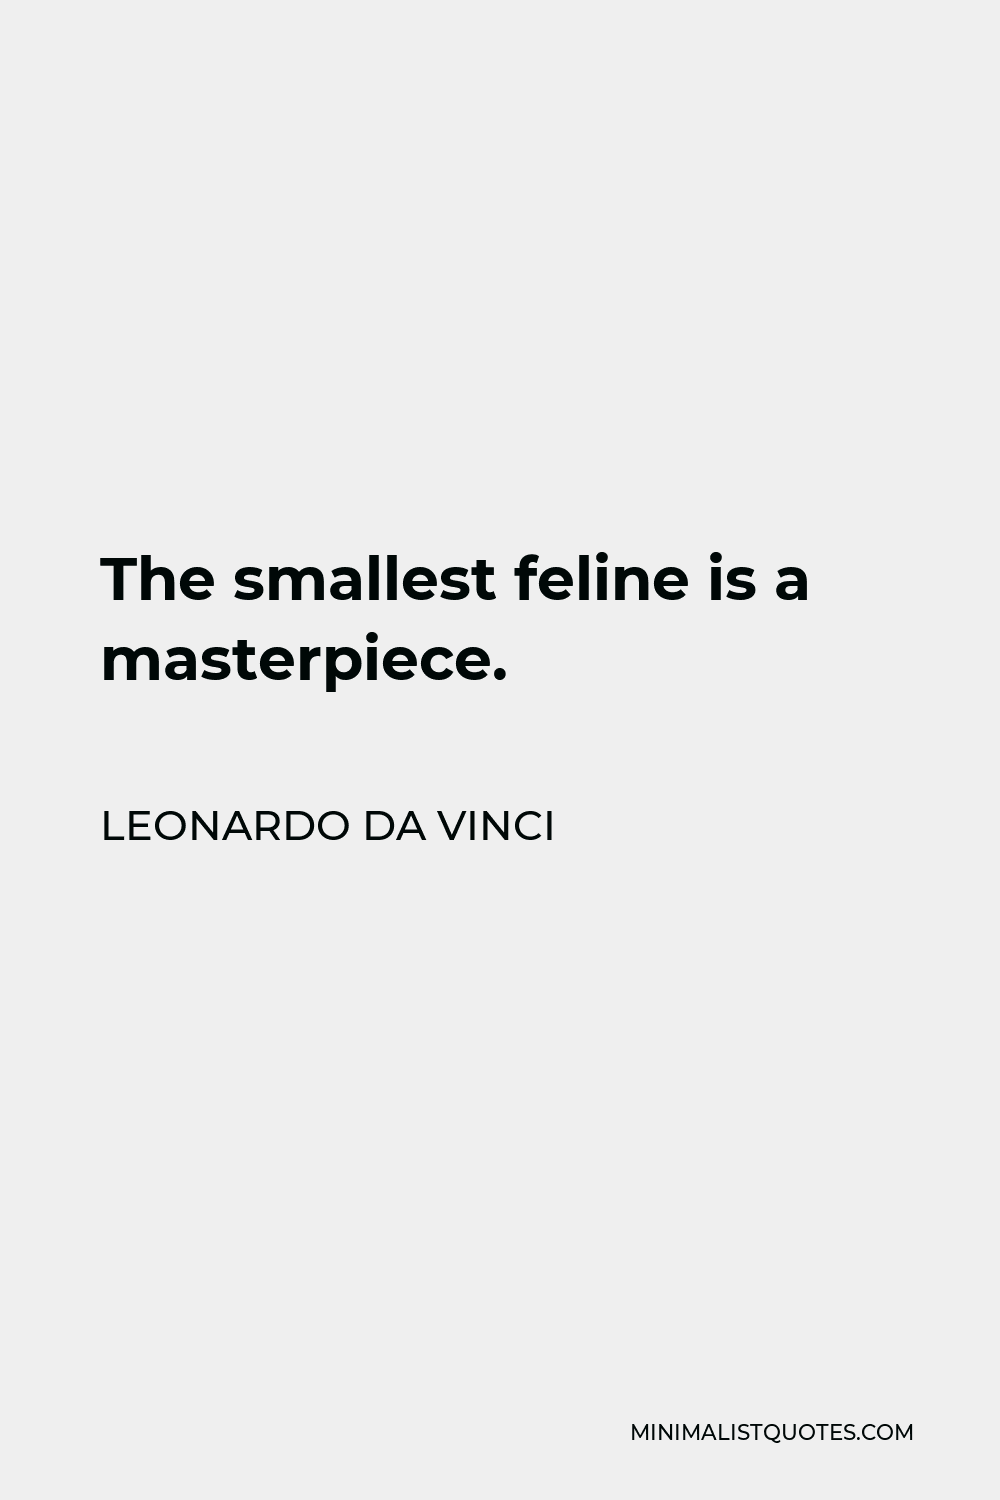 Leonardo da Vinci Quote - The smallest feline is a masterpiece.